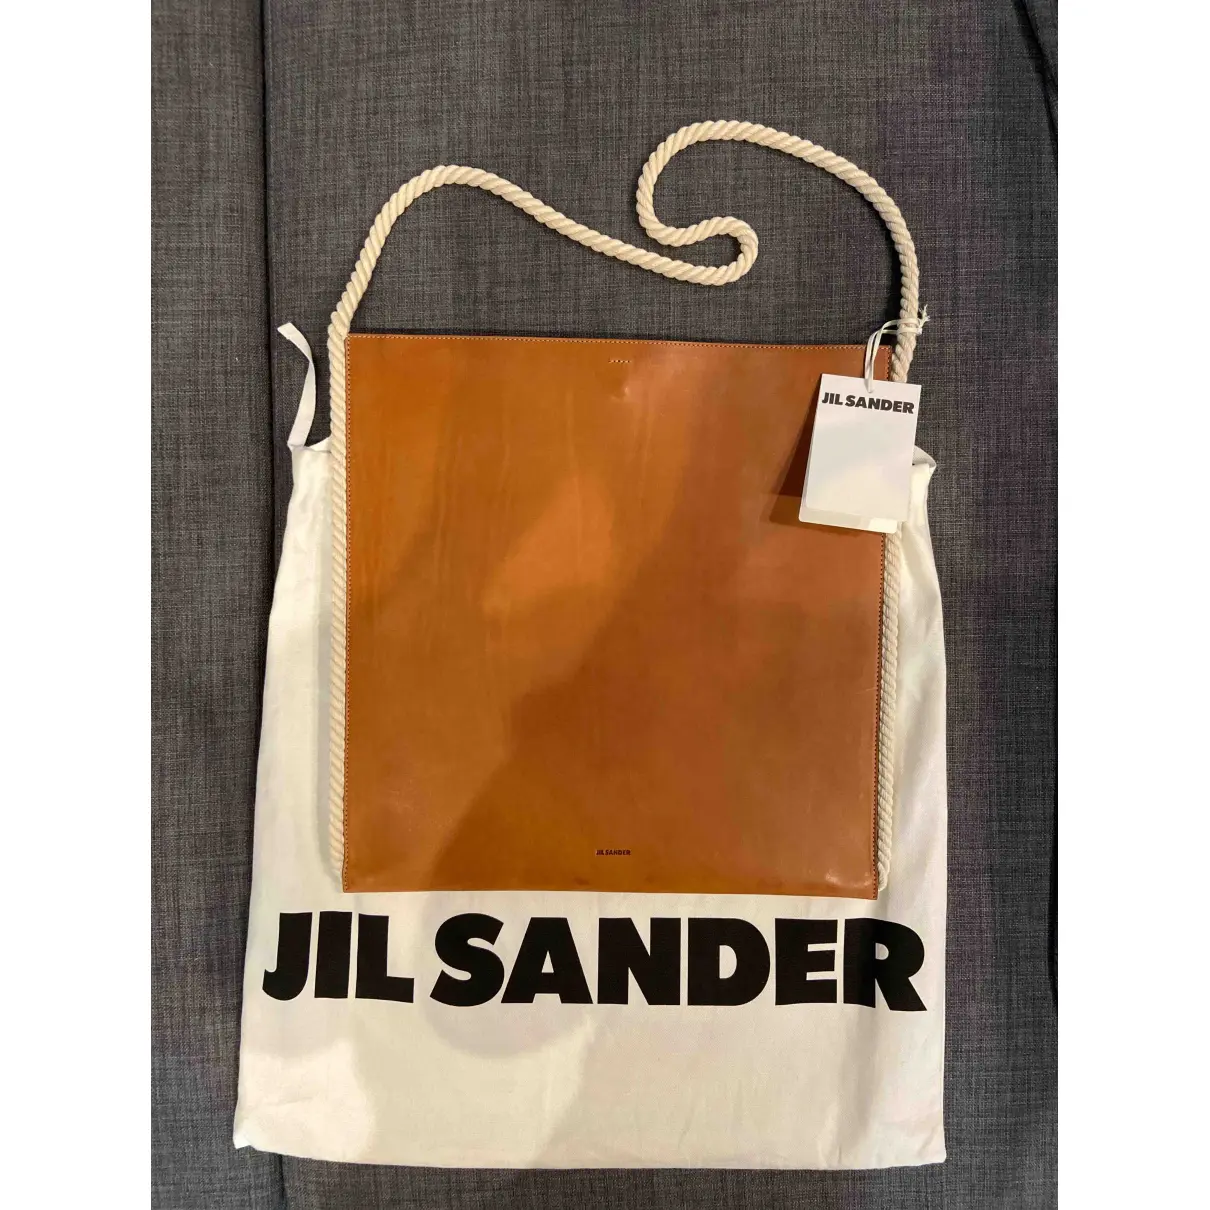 Buy Jil Sander Tangle leather tote online